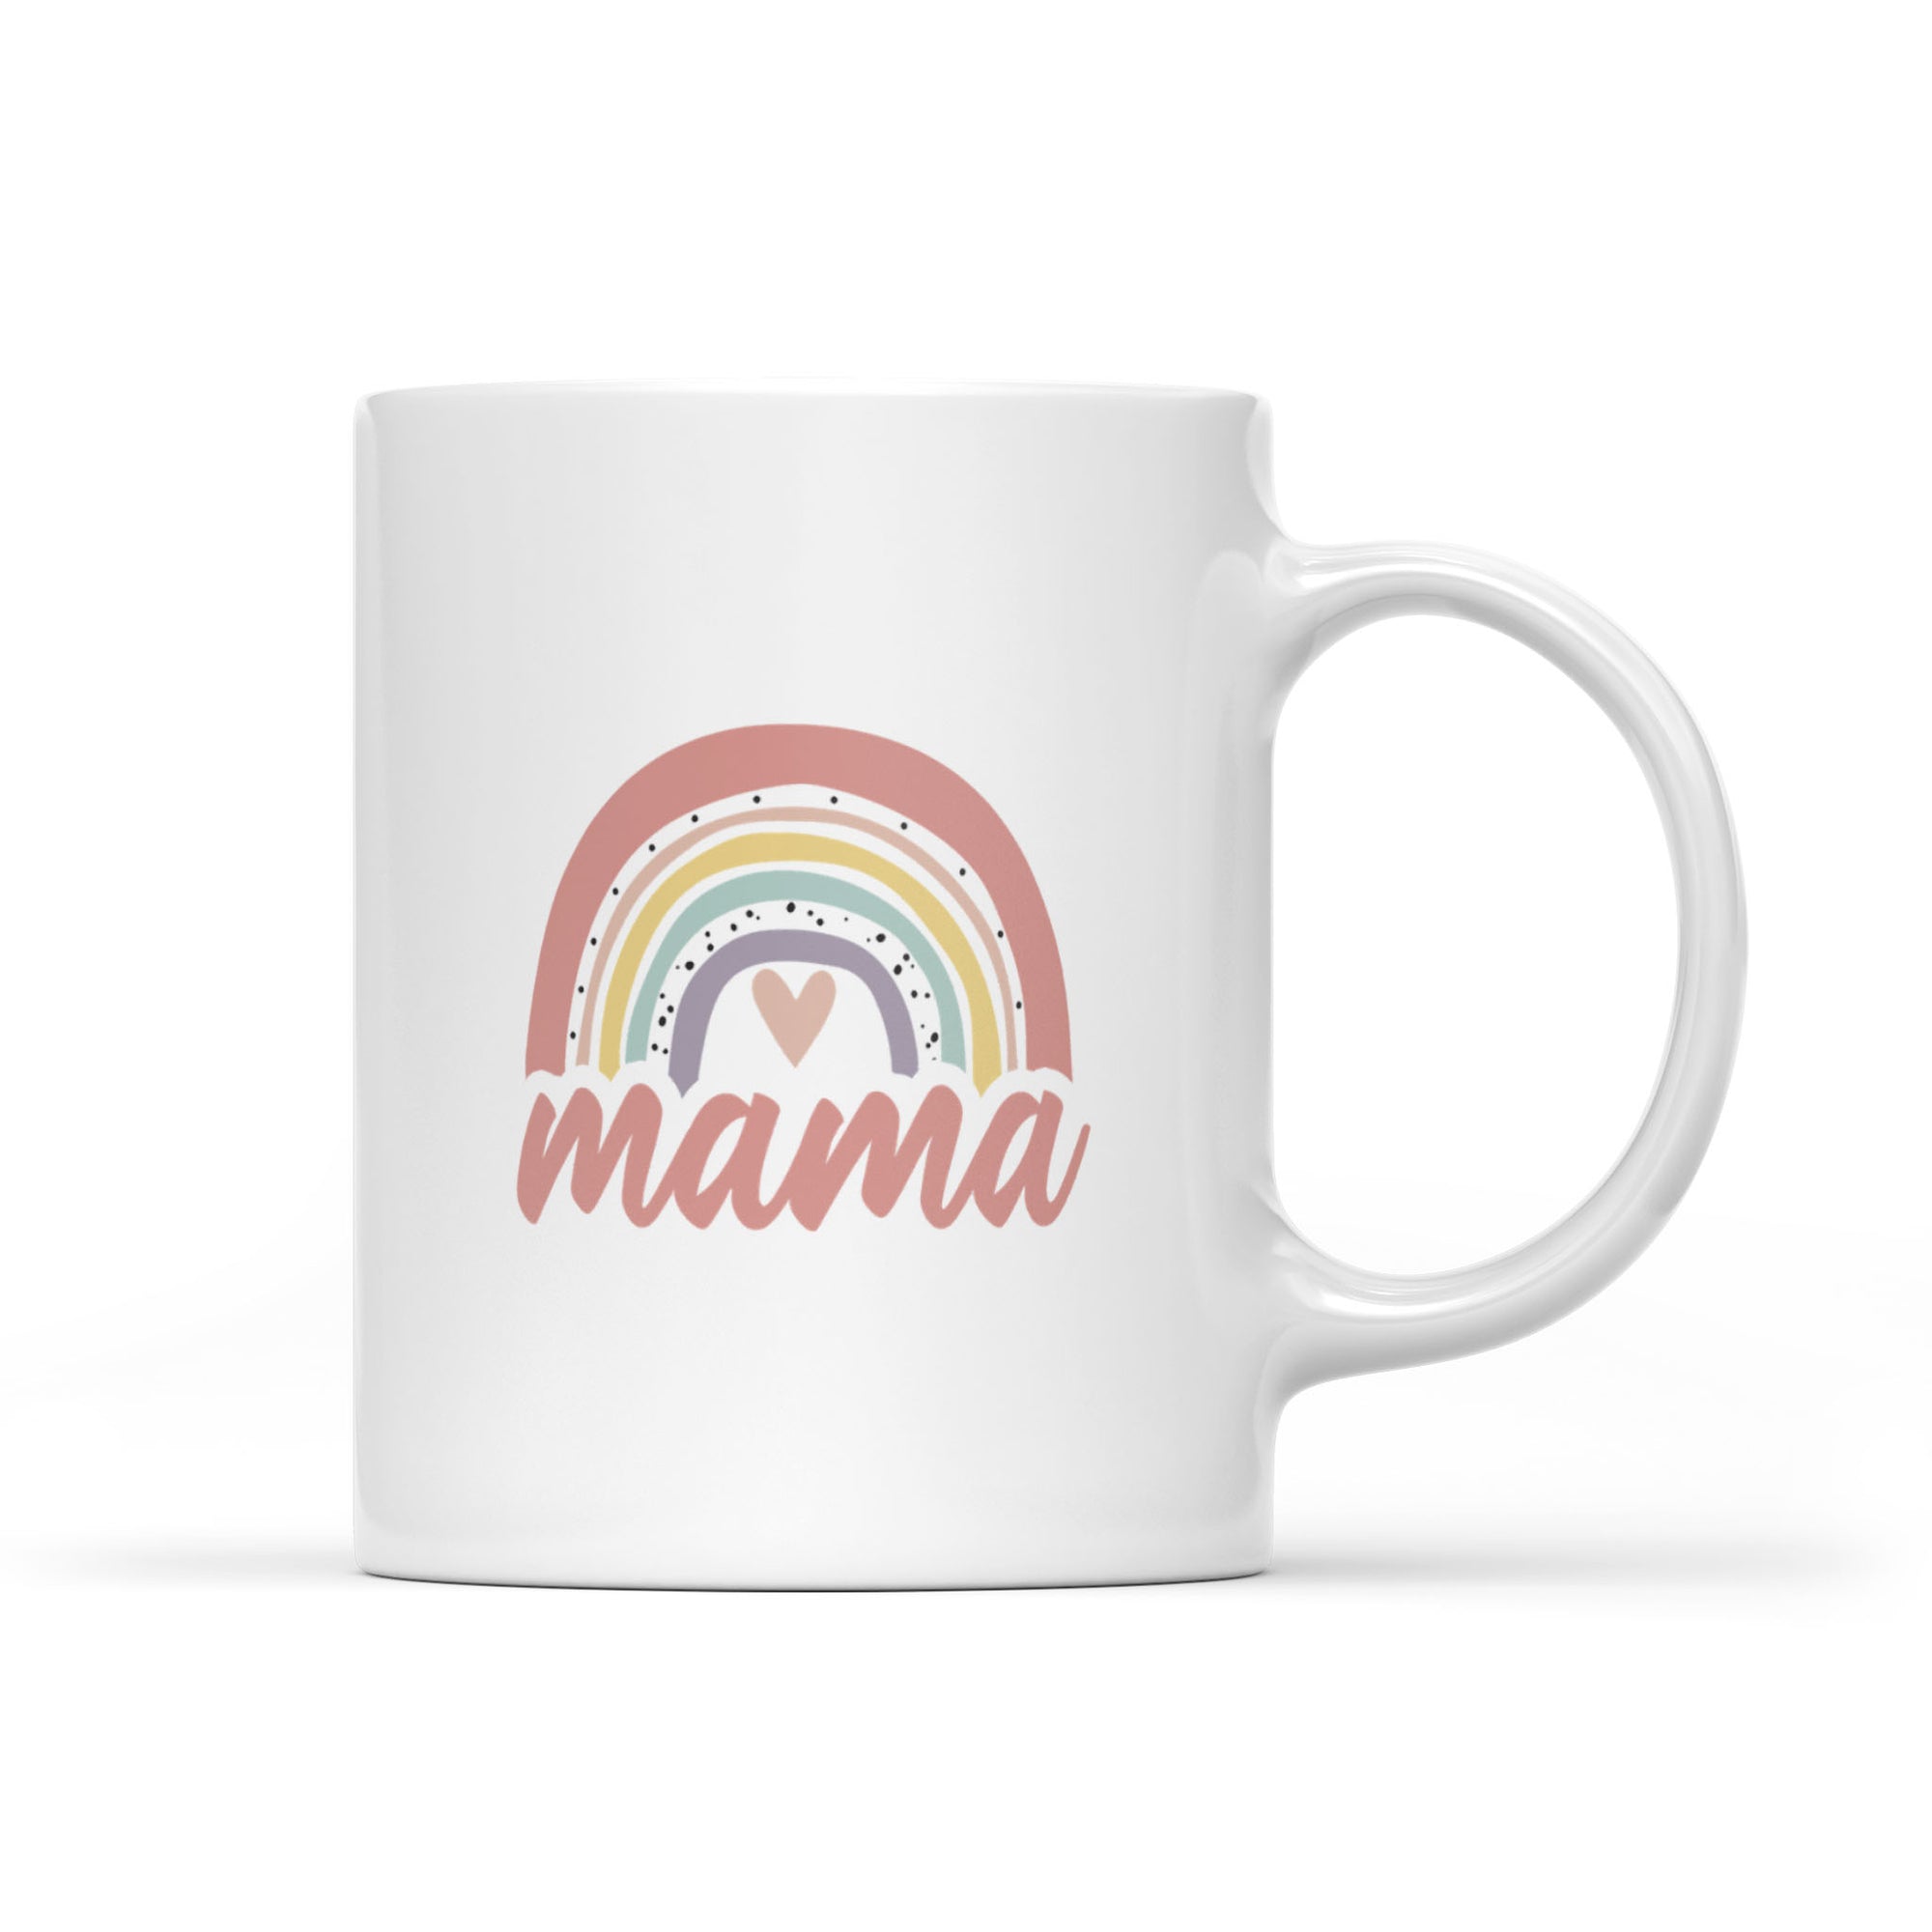 Mama You're My Everything - White Mug MG13